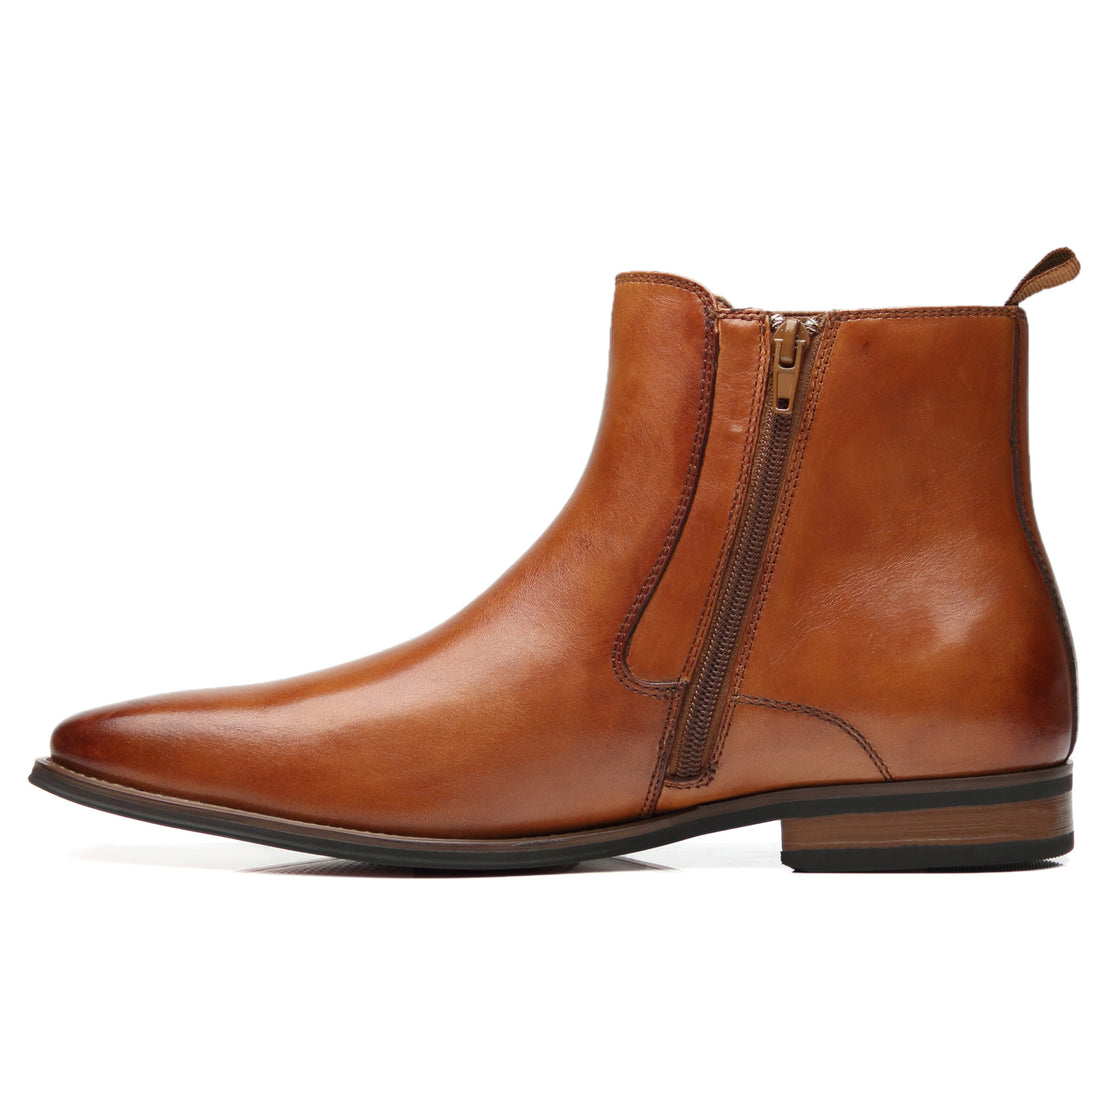 Men's Chelsea Boots Angus-1-cognac | La Milano Mens Shoes